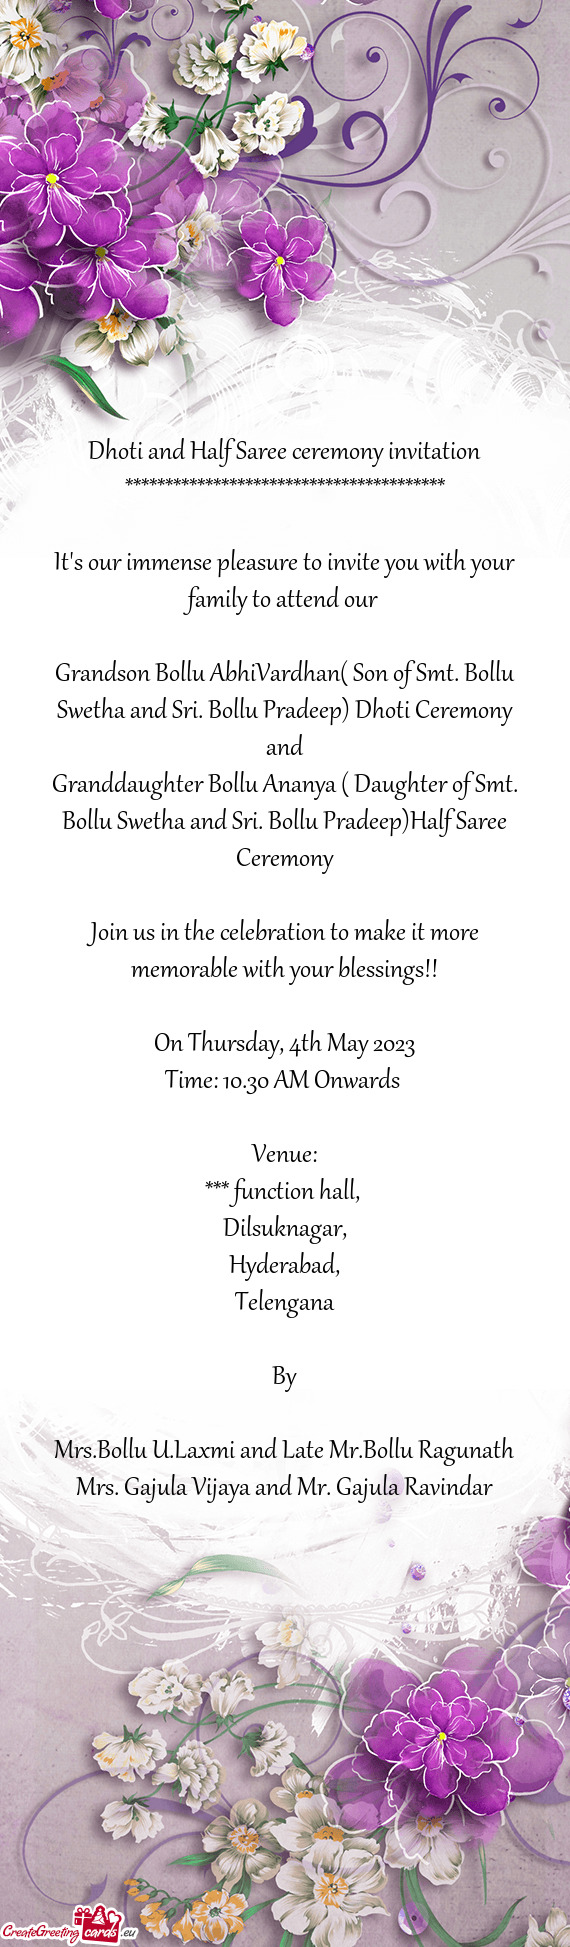 Grandson Bollu AbhiVardhan( Son of Smt. Bollu Swetha and Sri. Bollu Pradeep) Dhoti Ceremony